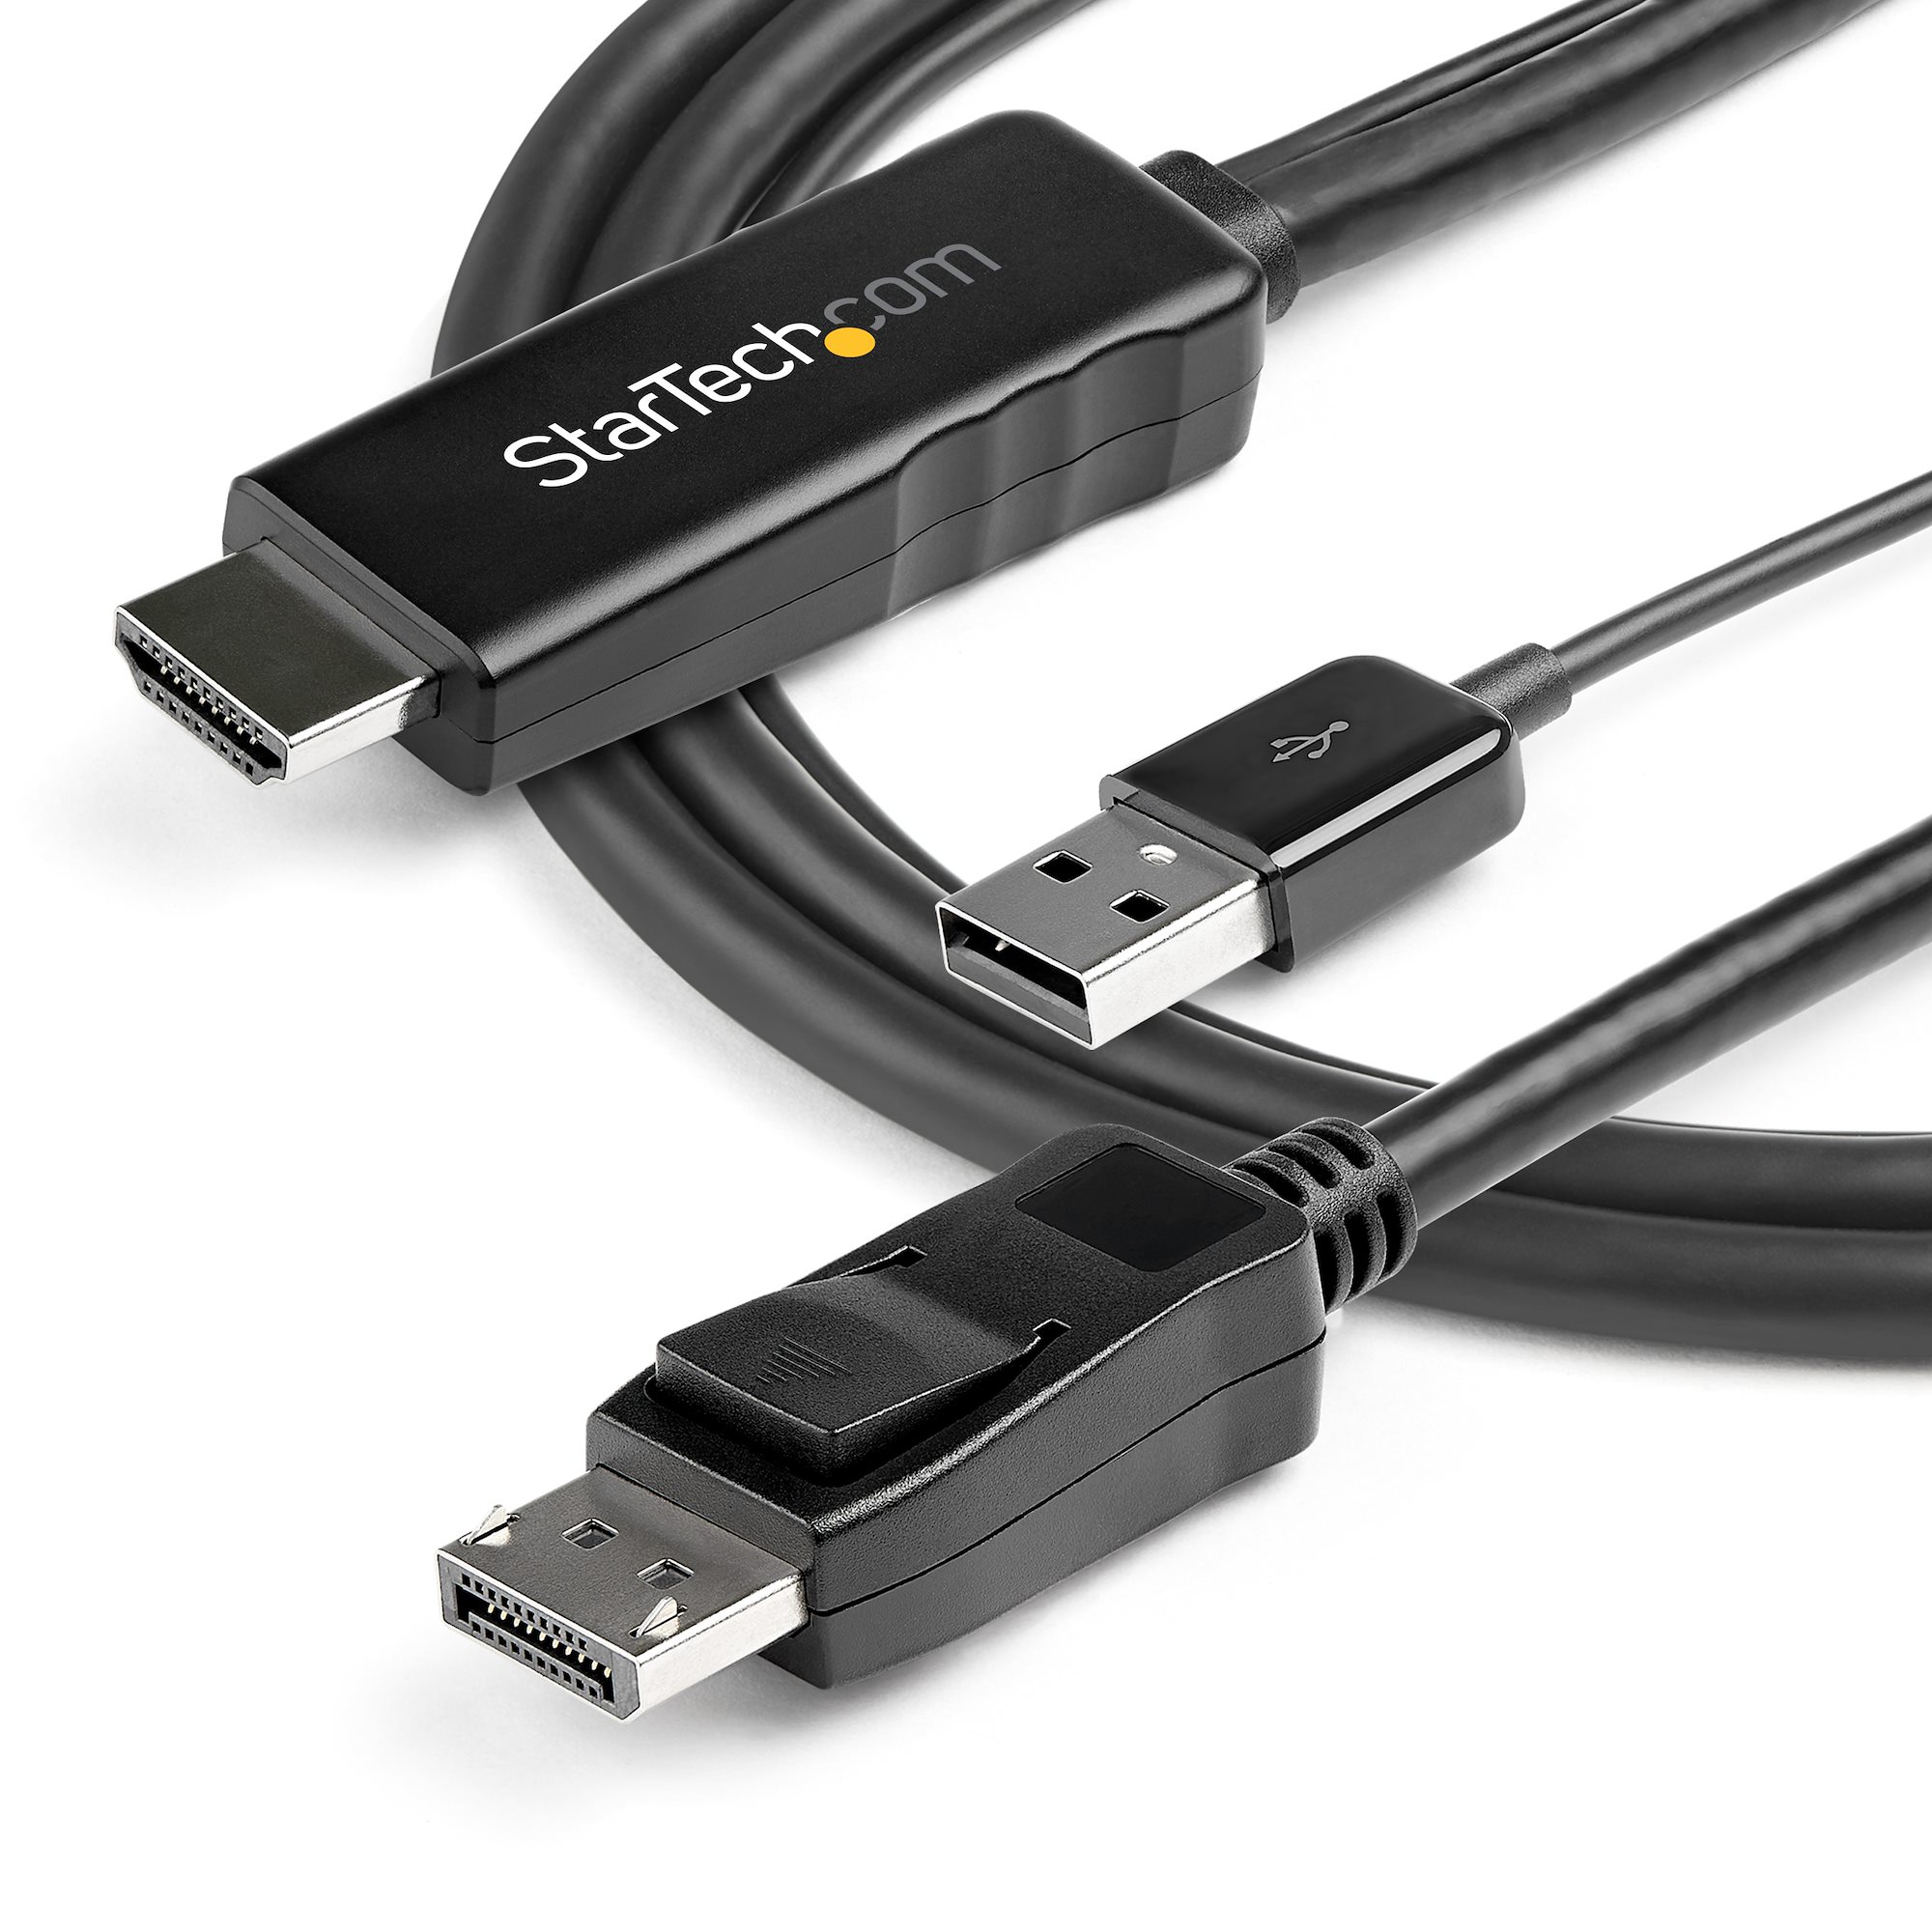 Câble Mini DisplayPort 4K vers DisplayPort - Version : 1.2 - 3840 x 2160,  Connecteur 1 : Mini DisplayPort Mâle, Connecteur 2 : DisplayPort Mâle,  Longueur : 5 mètres.